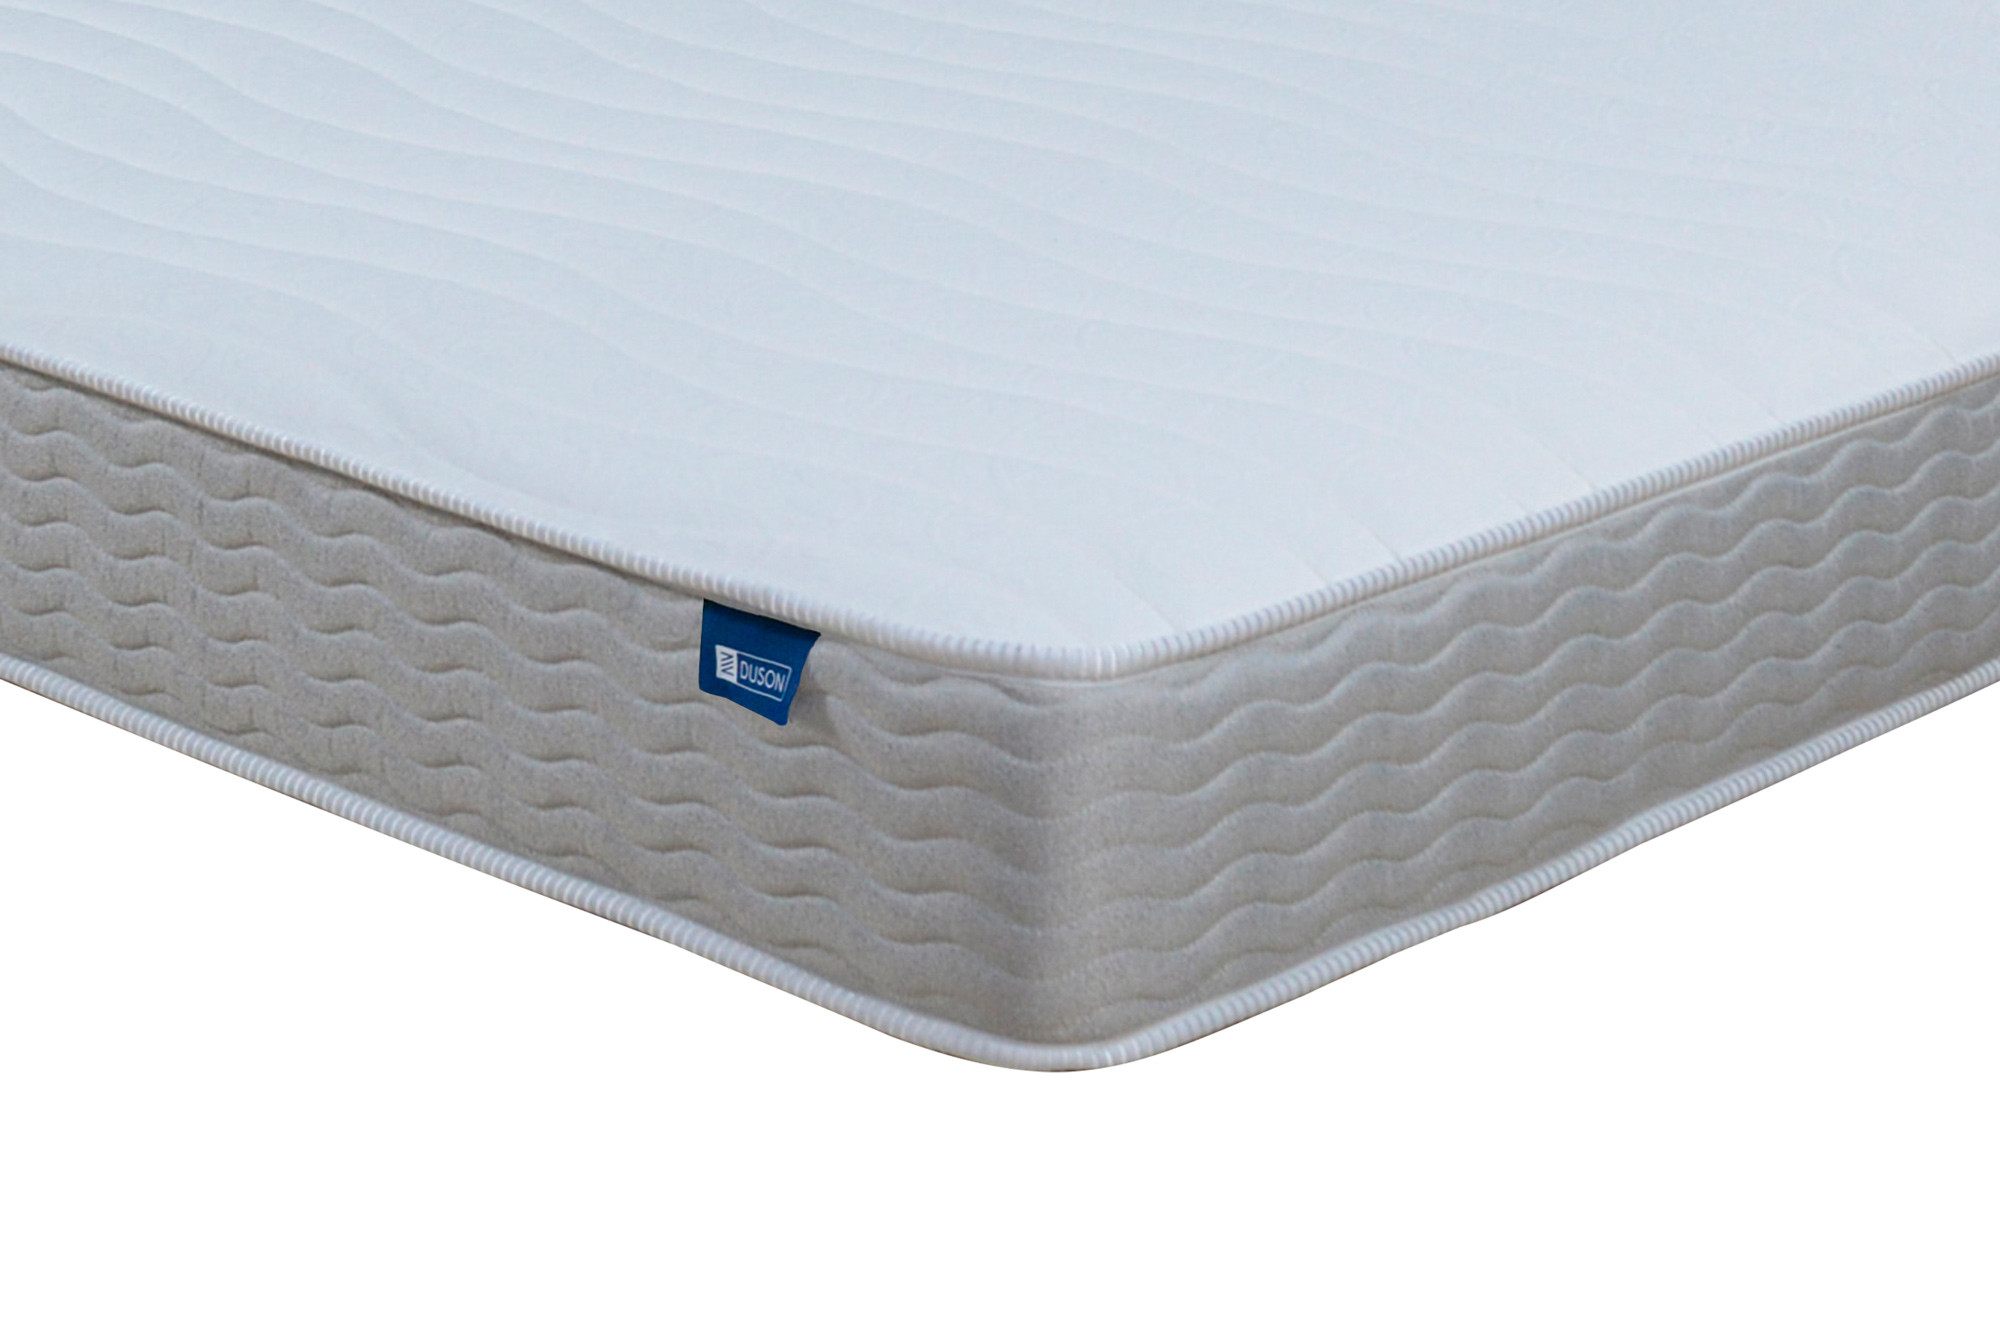 Orthopedic mattress Magic Latex 150x200 medium, 18cm